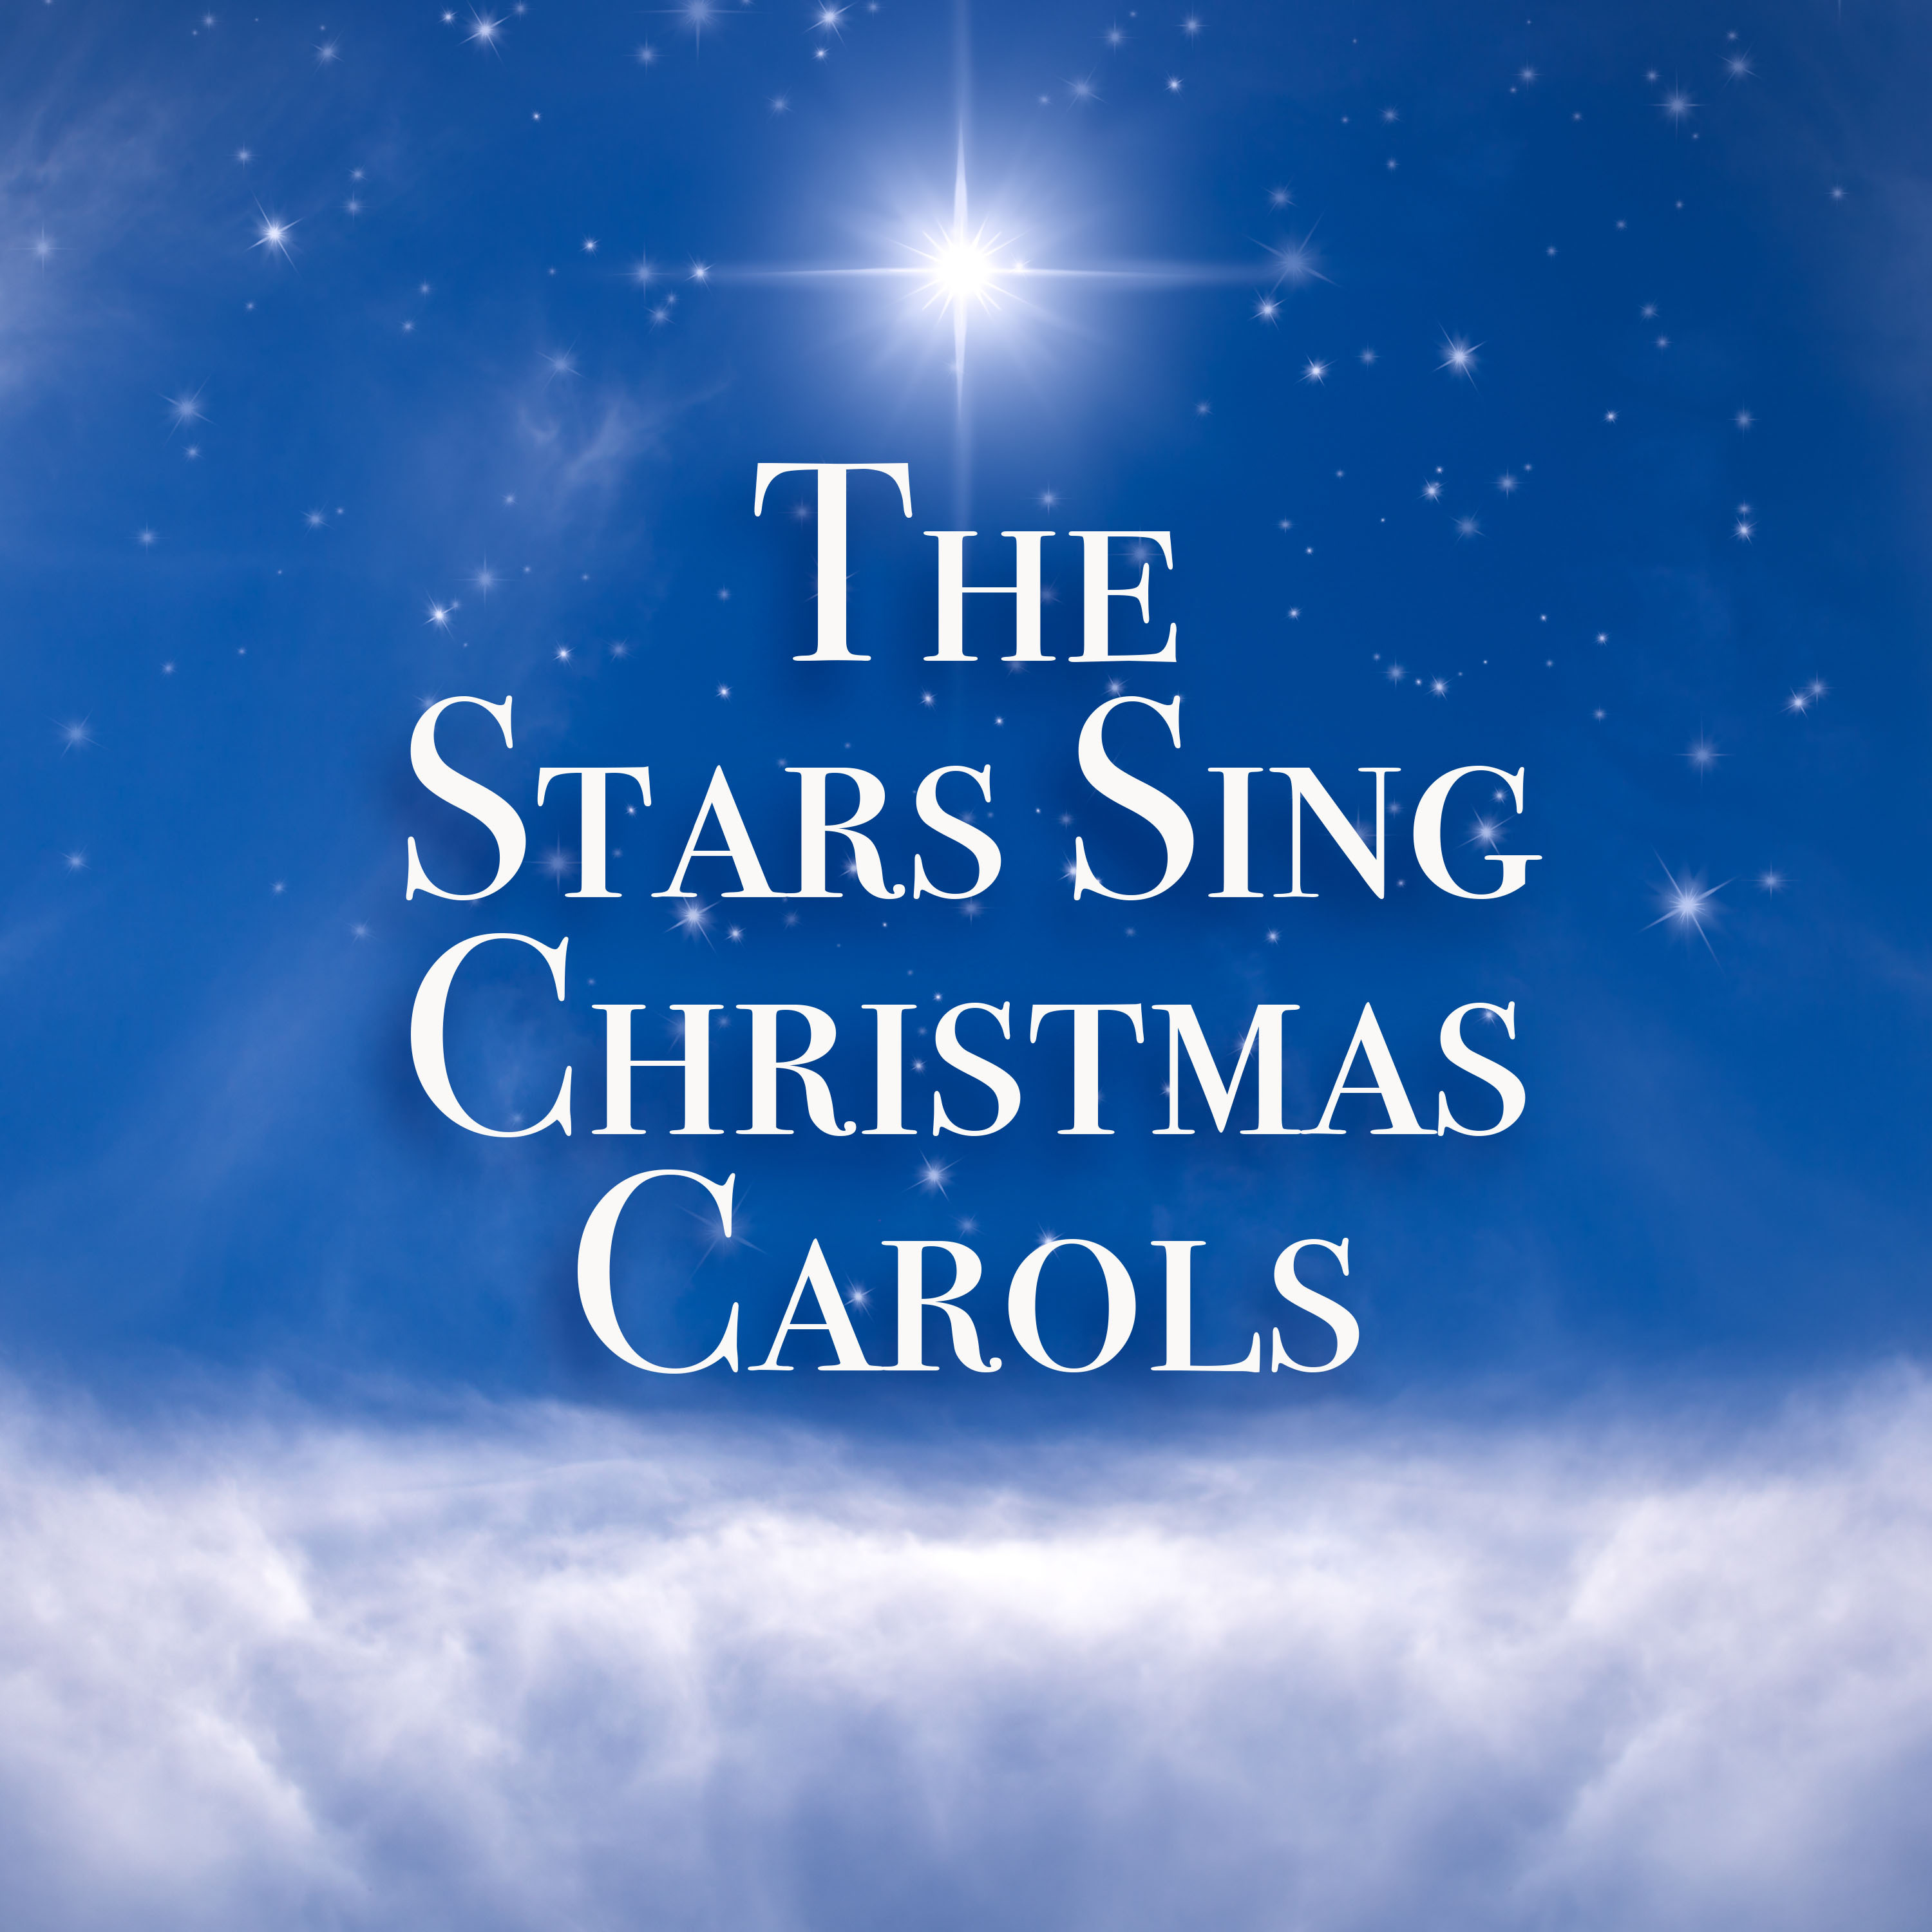 The Stars Sing Christmas Carols